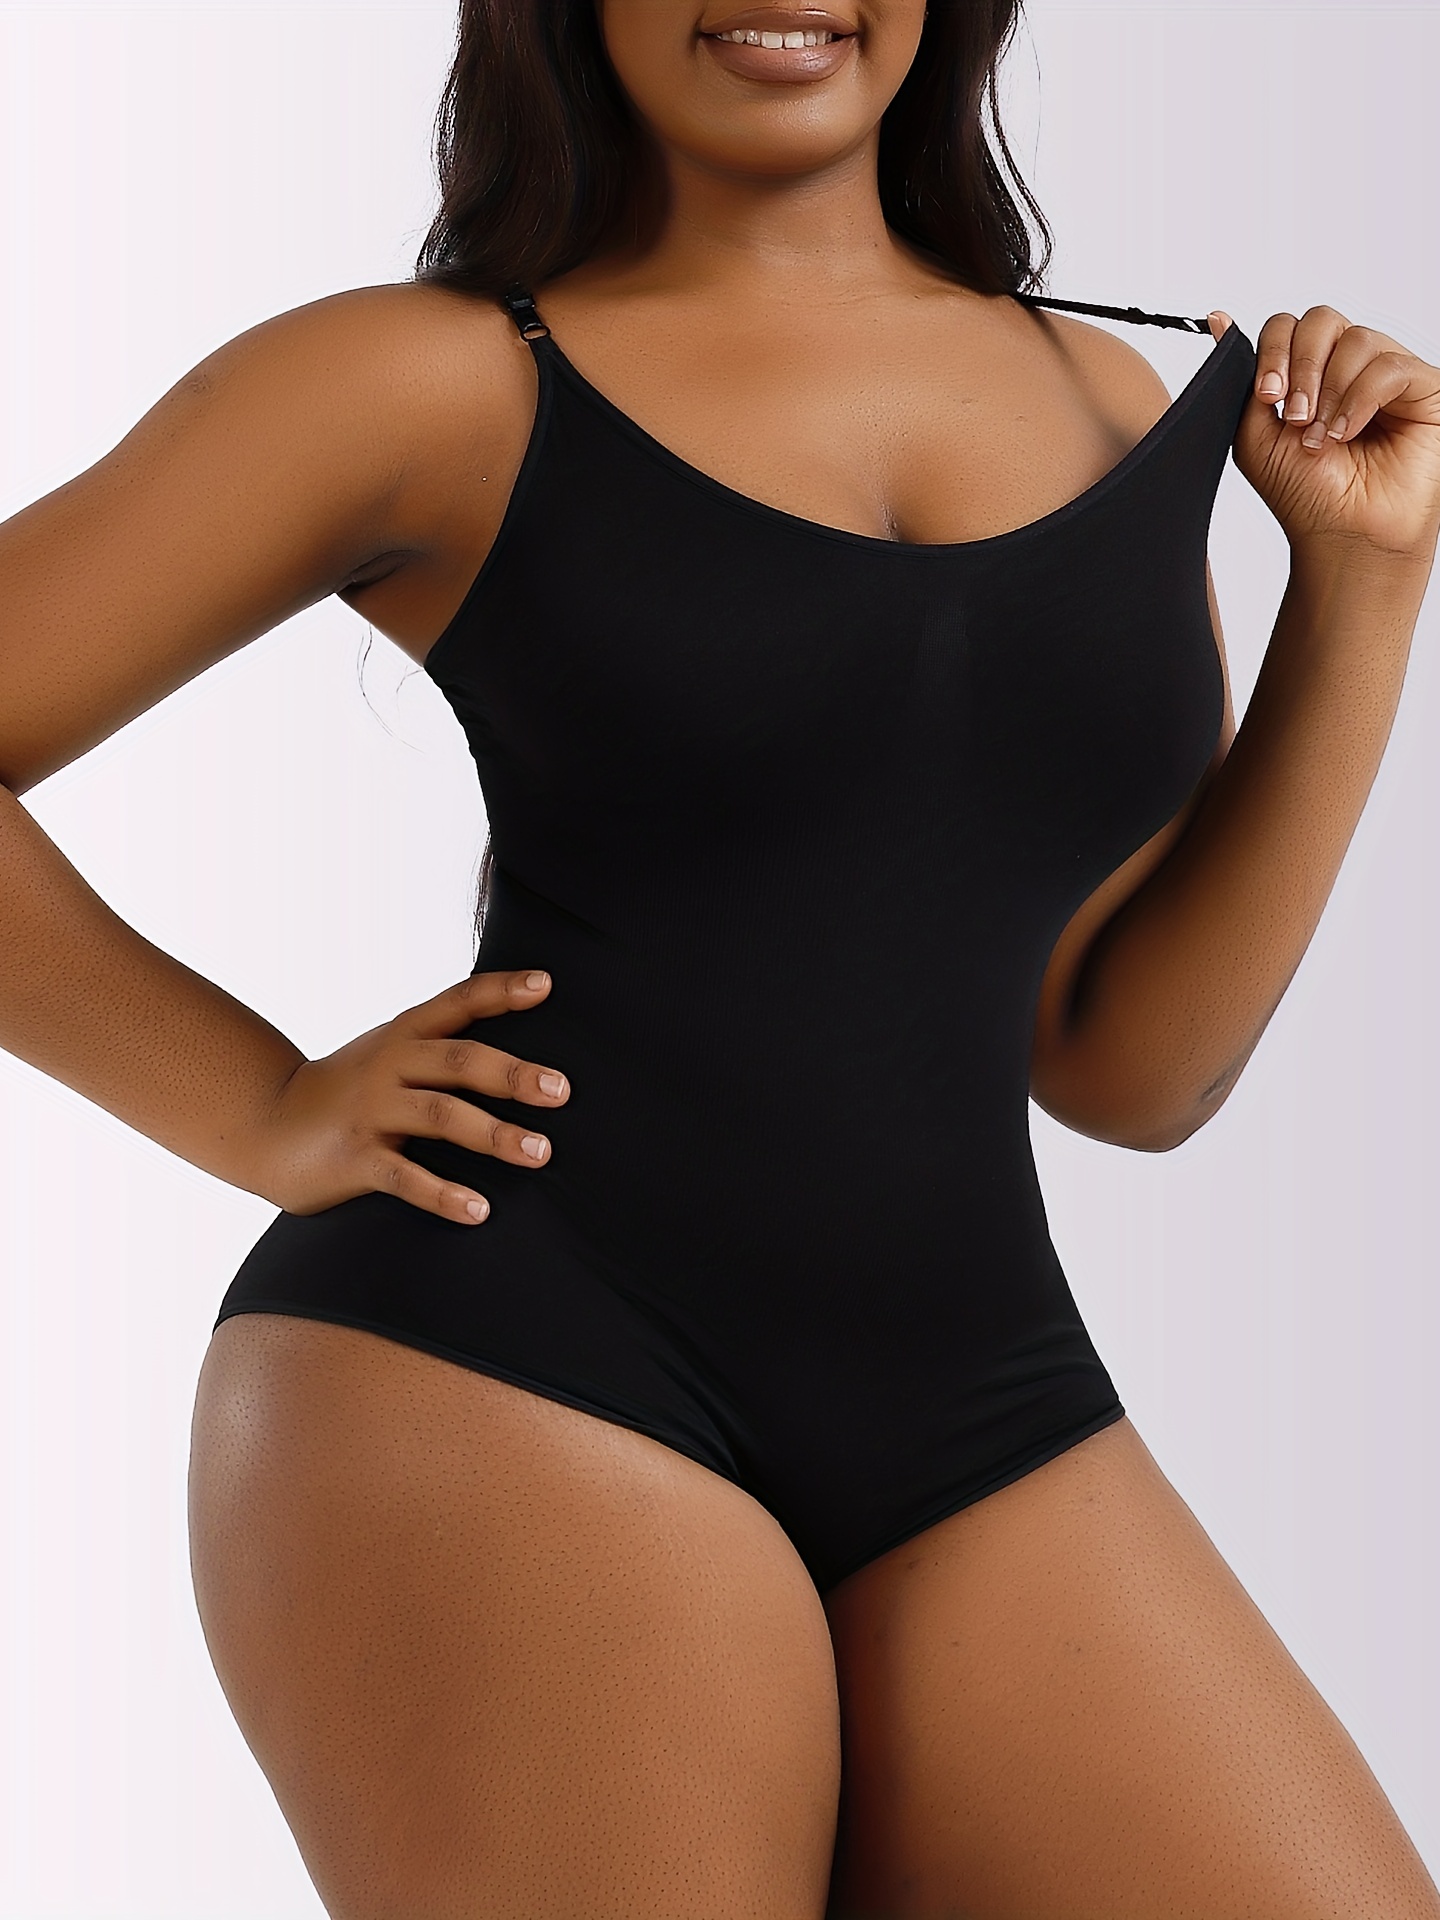 Aueoeo Black Bodysuit Women, Tight Bodysuit for Women Ladies Seamless  One-Piece Body Shaper Abdominal Lifter Hip Shaper Underwear Stretch  Slimming Body Corset 